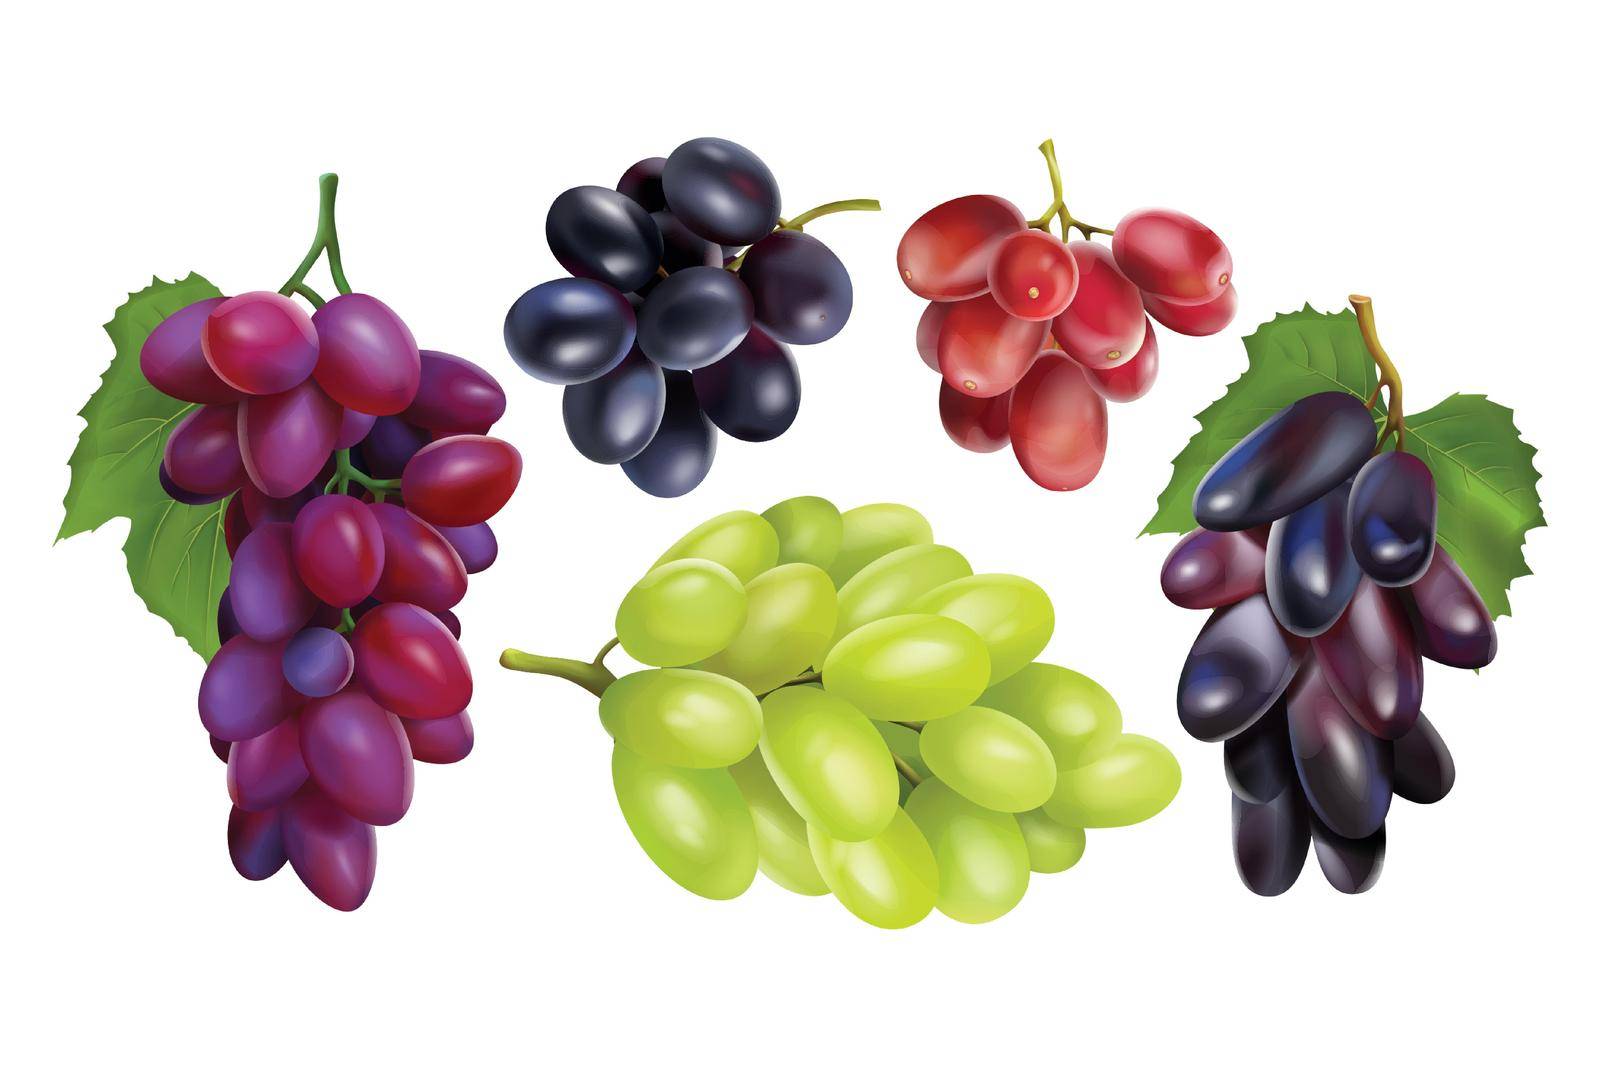 Realisitc grapes set collection by Vasilyeu